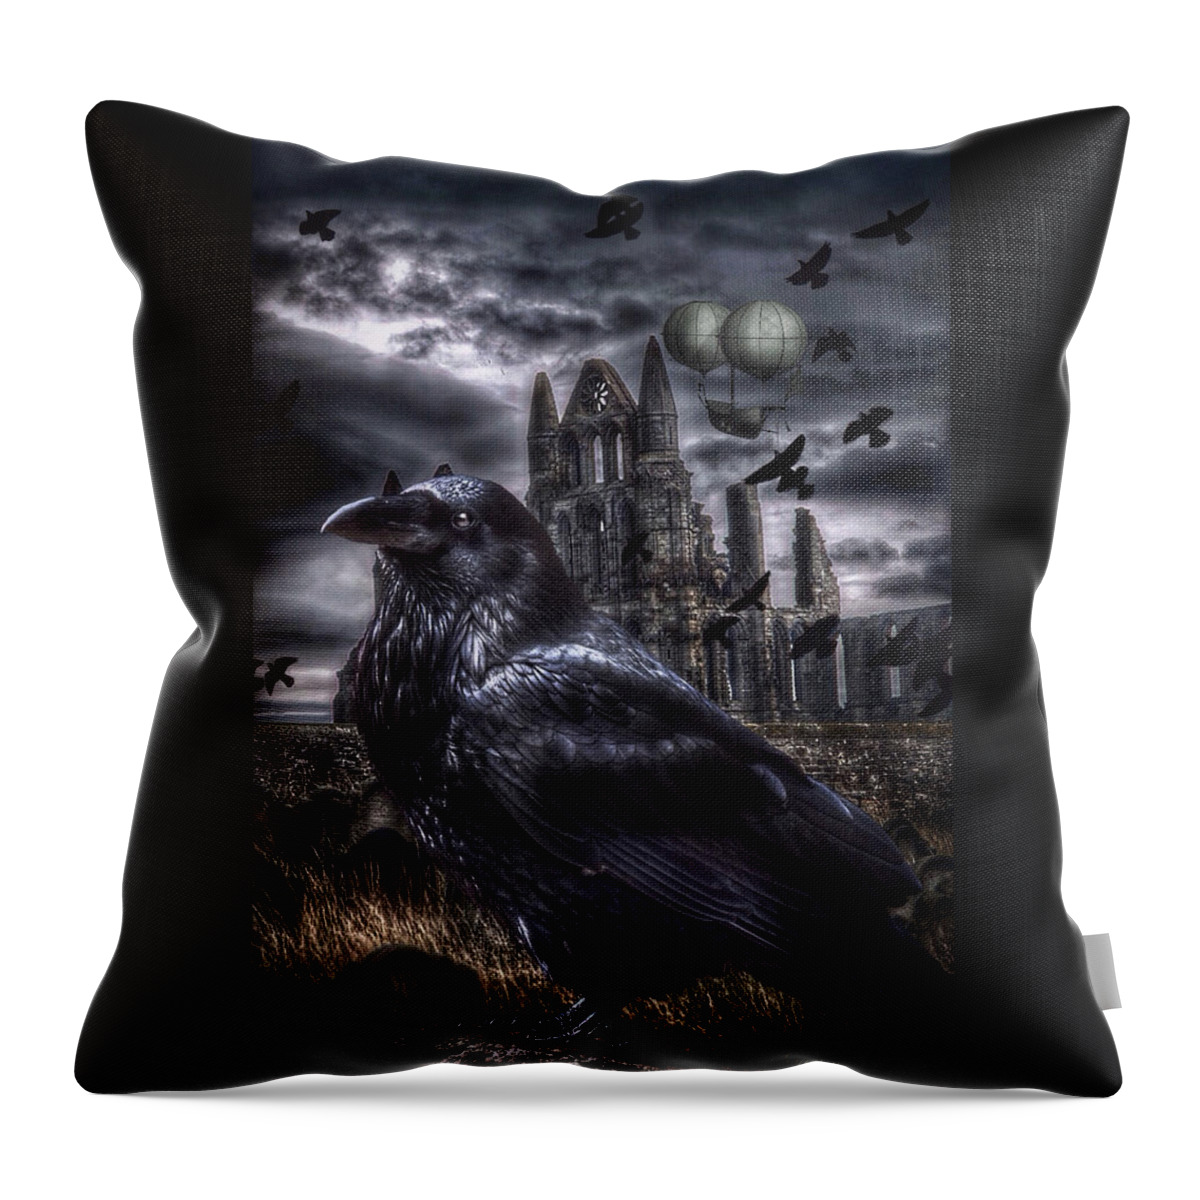 Raven Throw Pillow featuring the digital art Steampunk Raven by Brenda Wilcox aka Wildeyed n Wicked